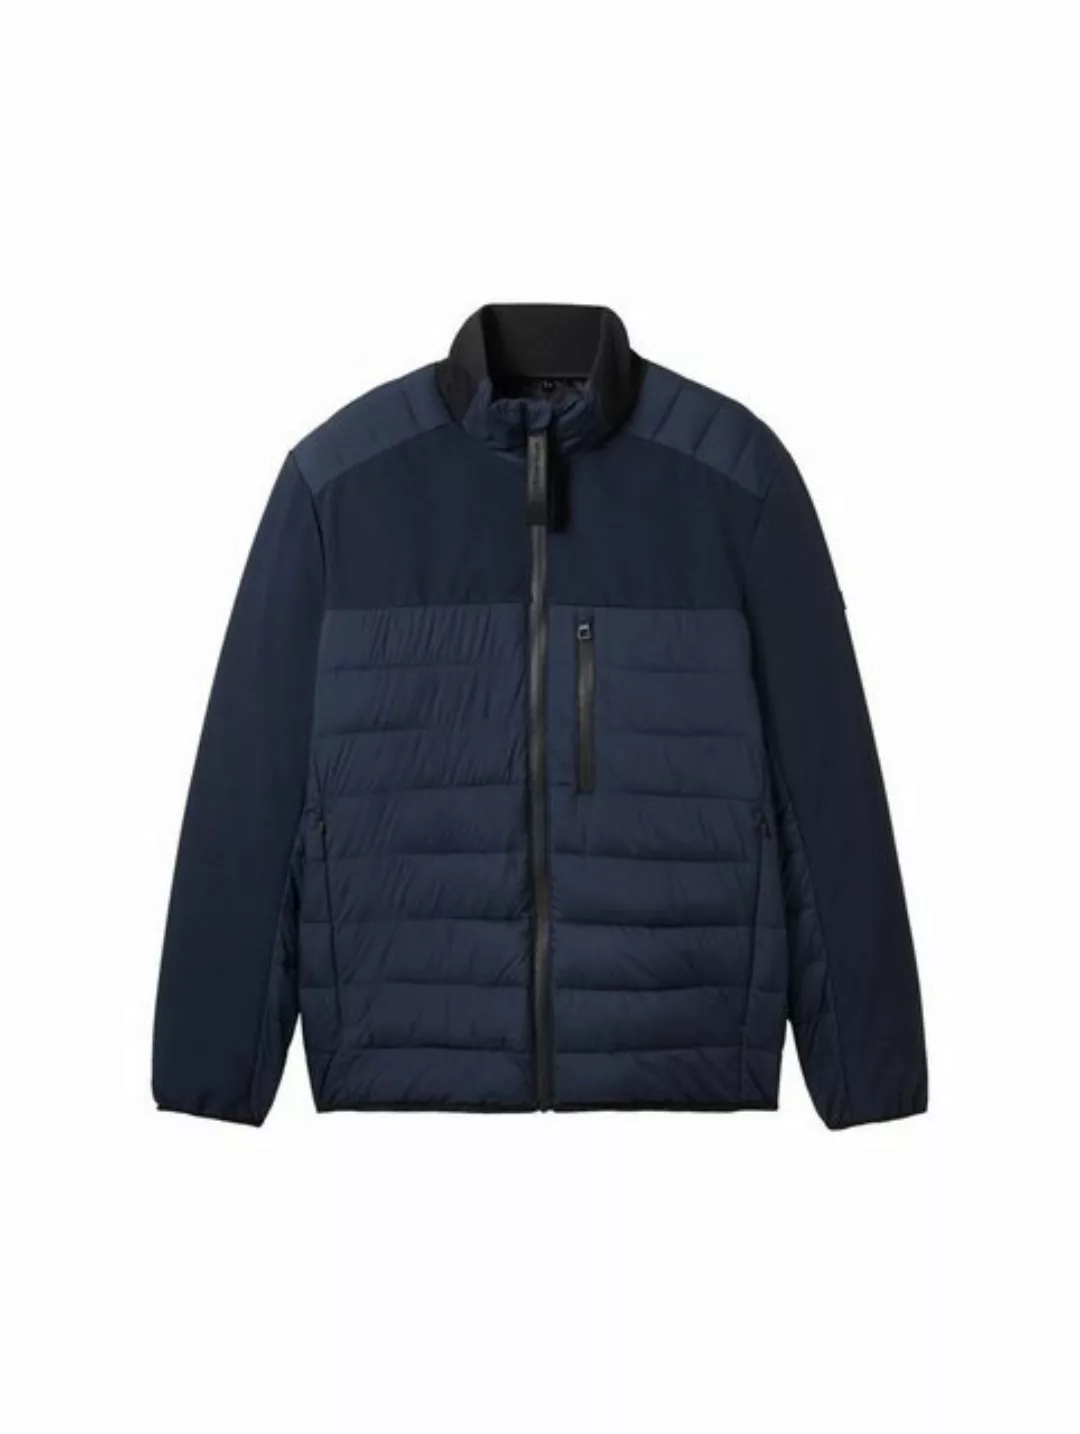 TOM TAILOR Denim Outdoorjacke hybrid jacket, sky captain blue günstig online kaufen